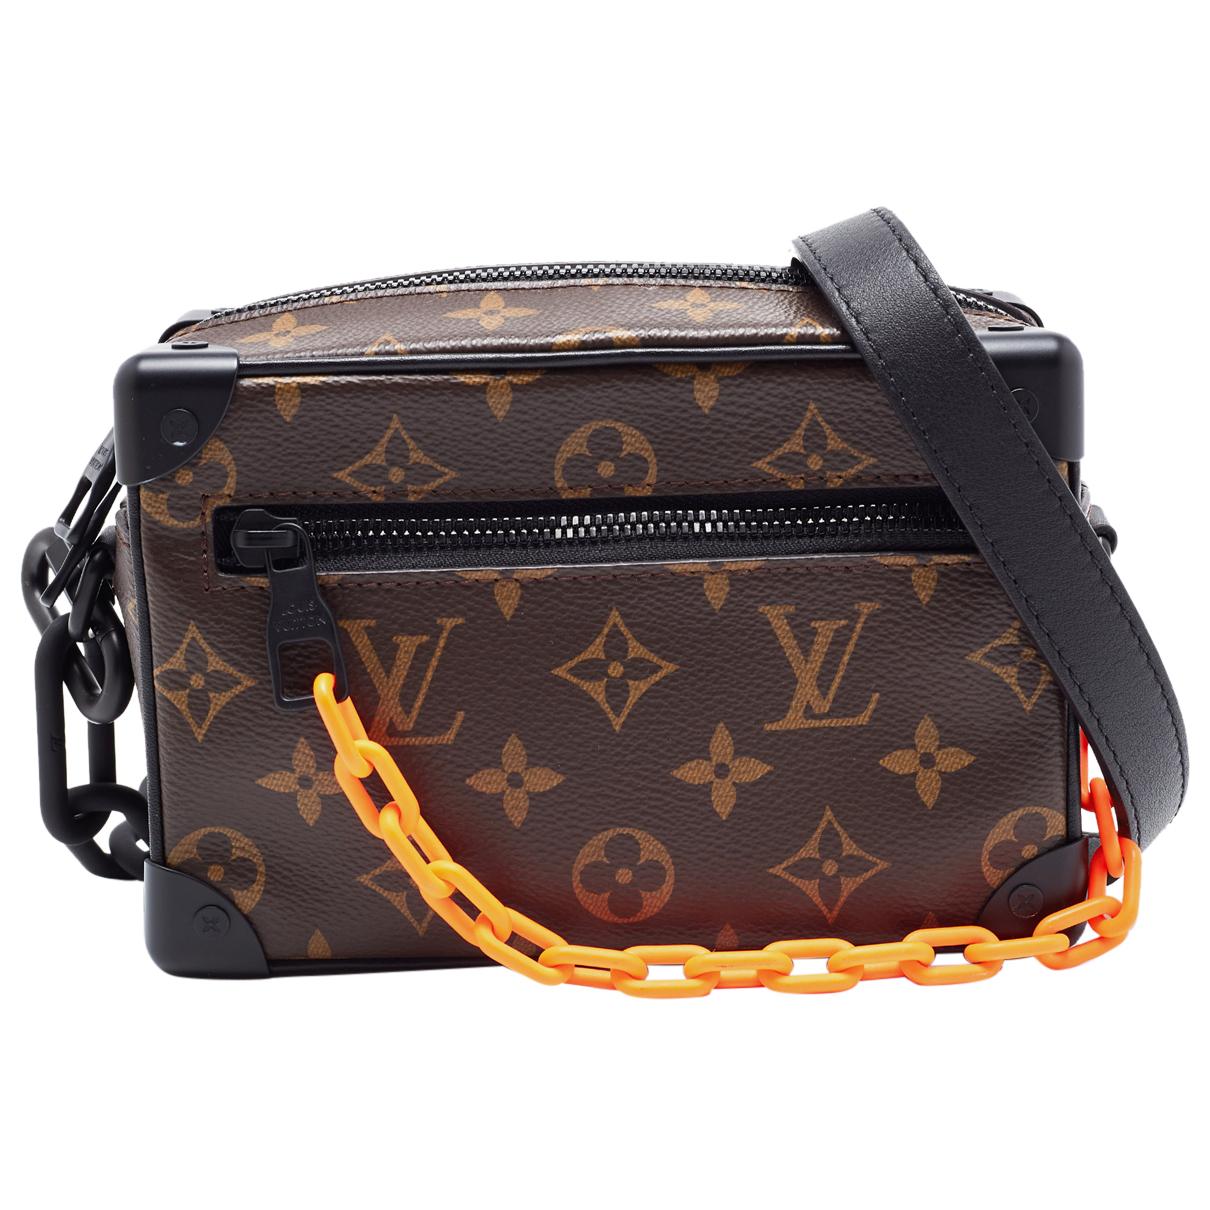 Bum bag / sac ceinture leather crossbody bag Louis Vuitton Brown in Leather  - 34838455